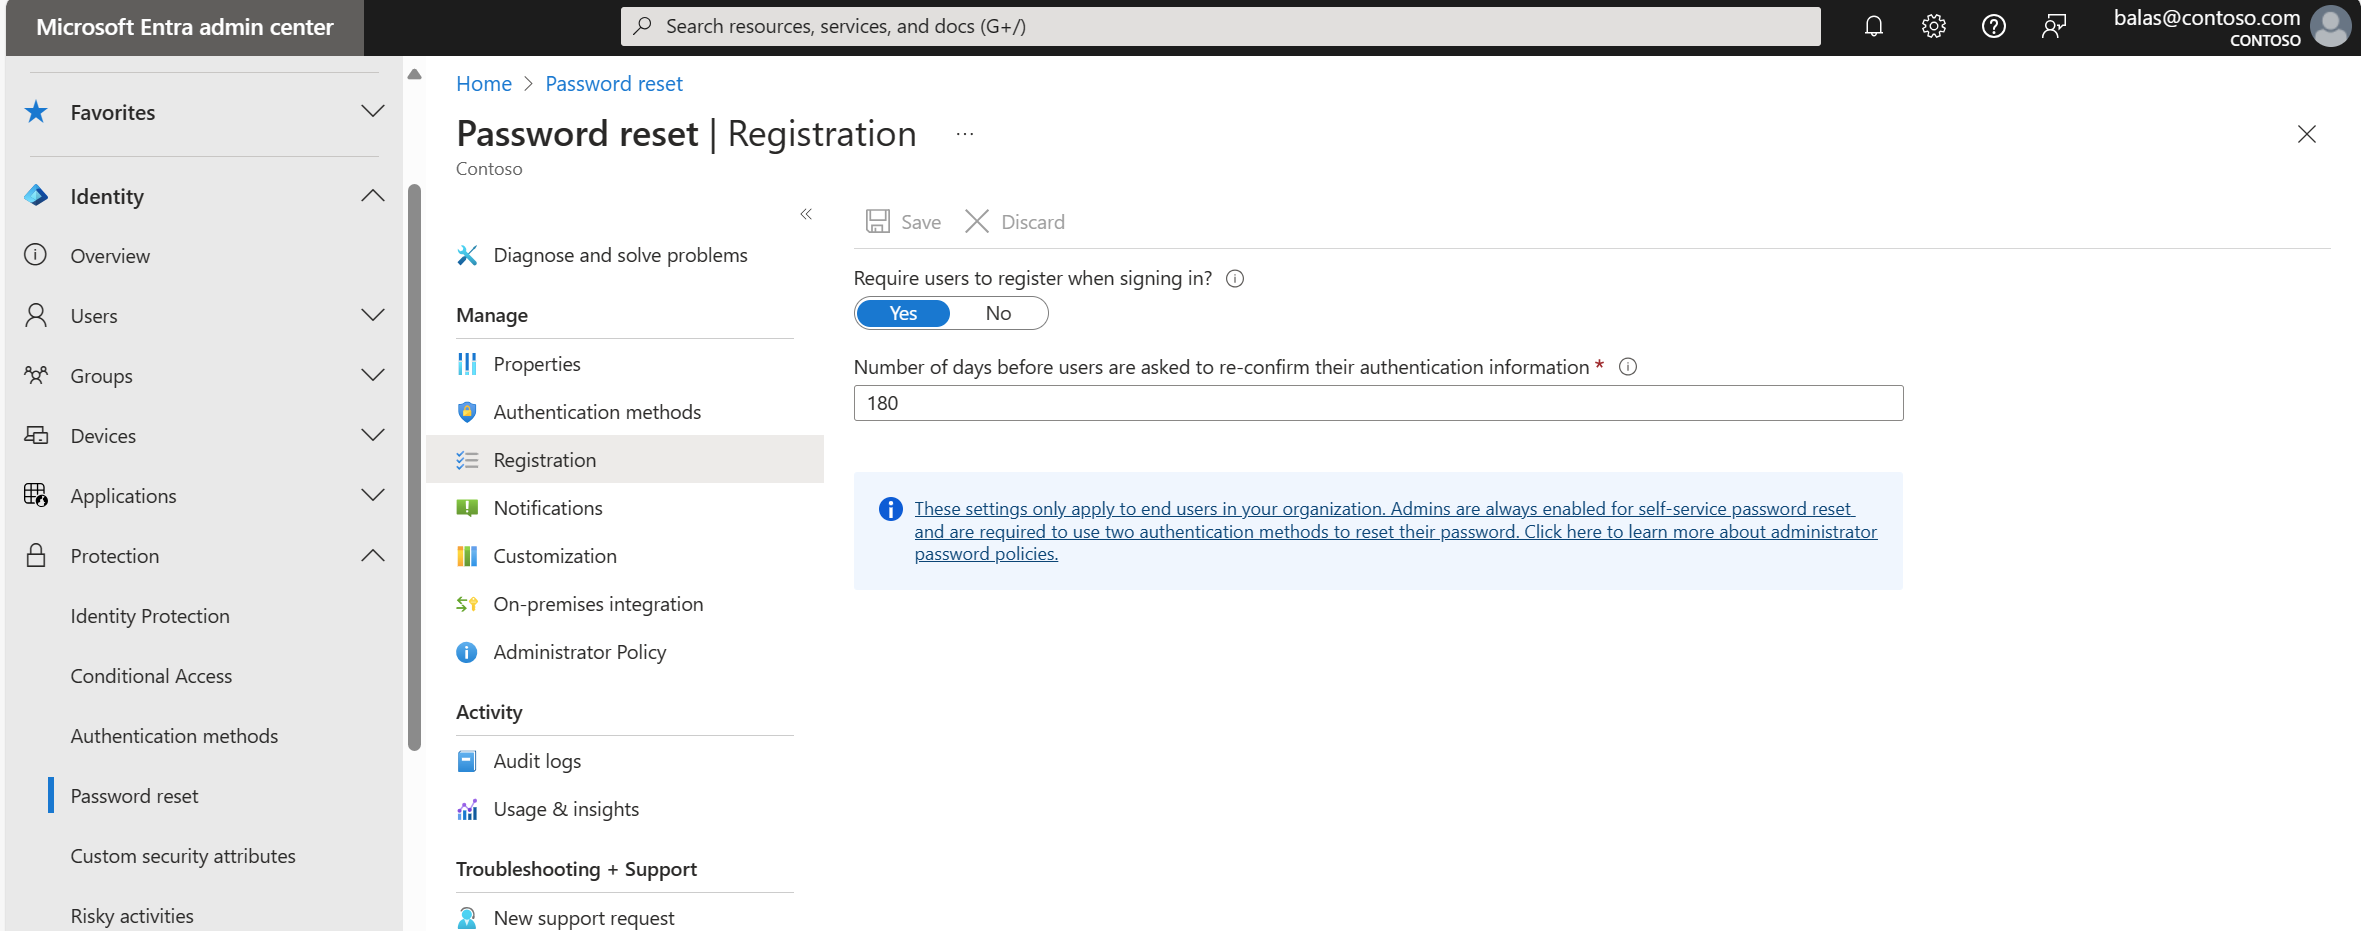 Screenshot of password reset registration for Microsoft Entra ID.